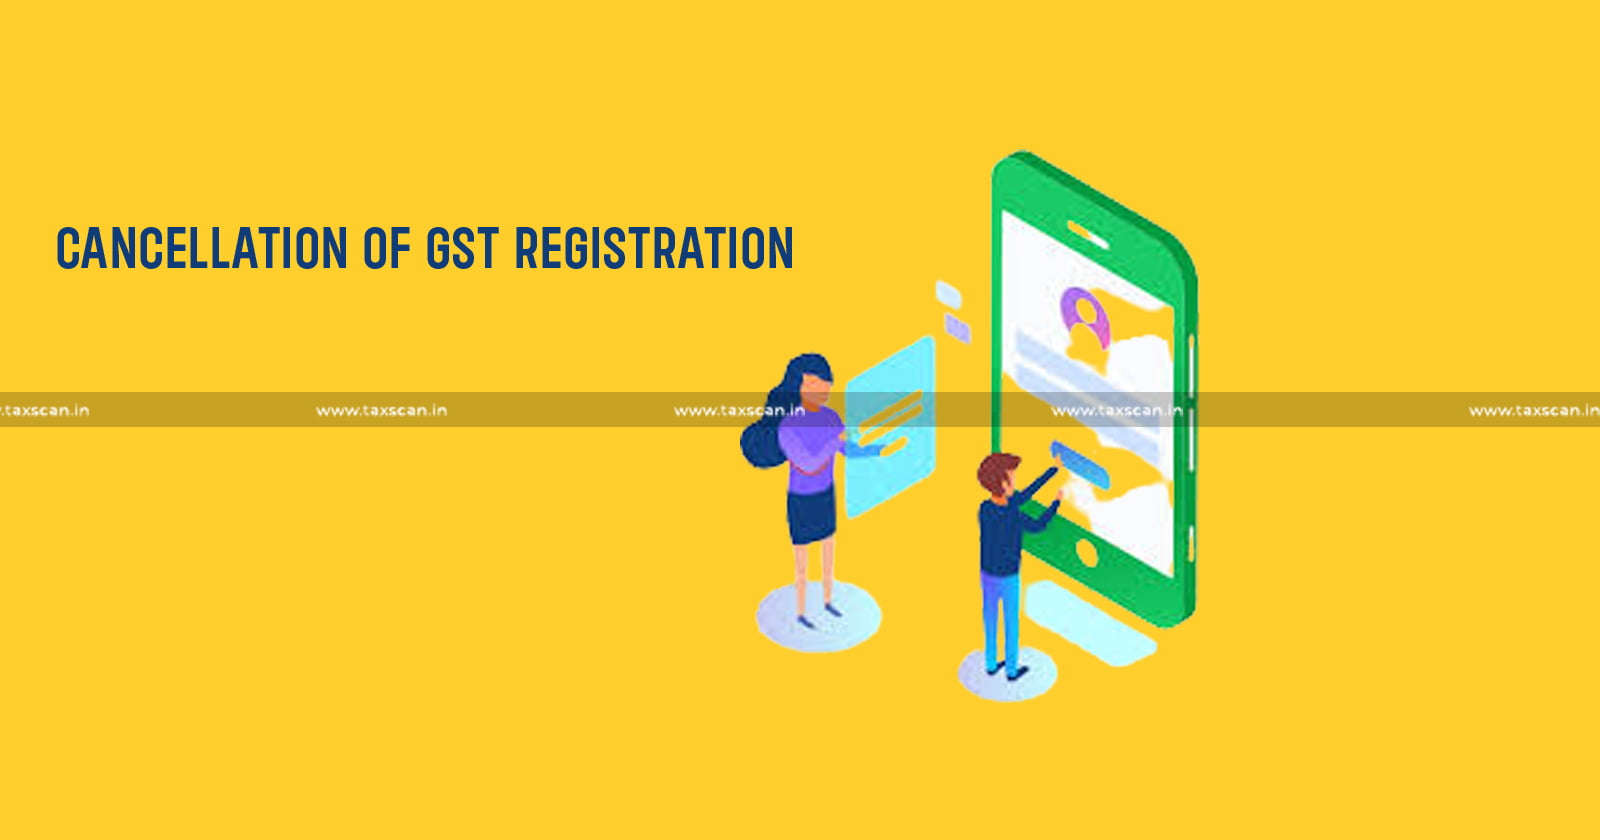 Cancellation of GST registration - cancellation of gst - gst registration - gst - gst cancellation - Patna High court - taxscan